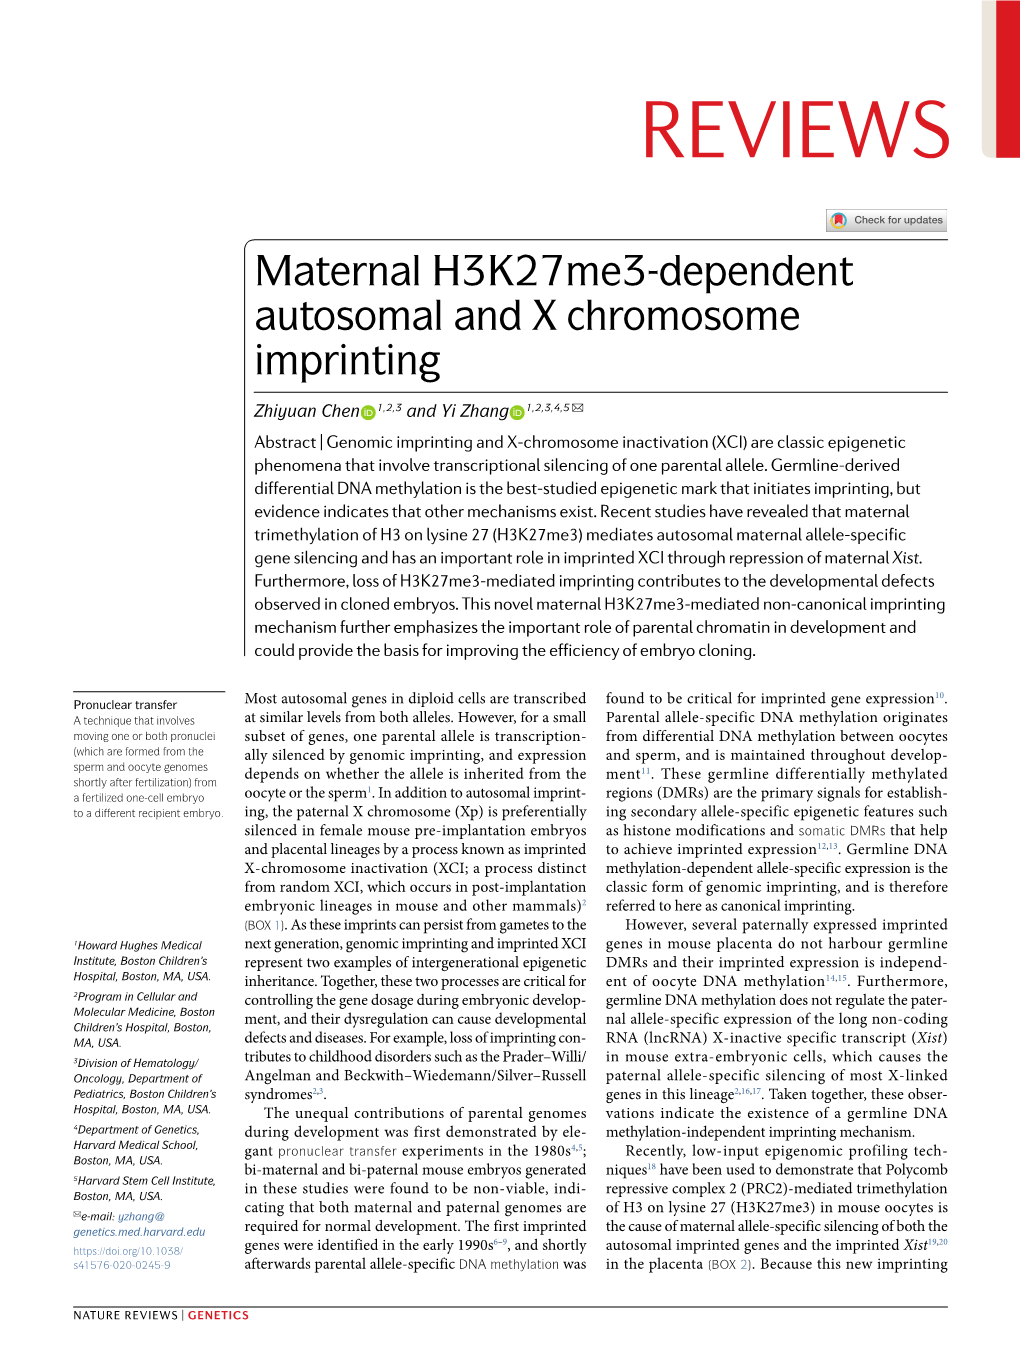 Dependent Autosomal and X Chromosome Imprinting